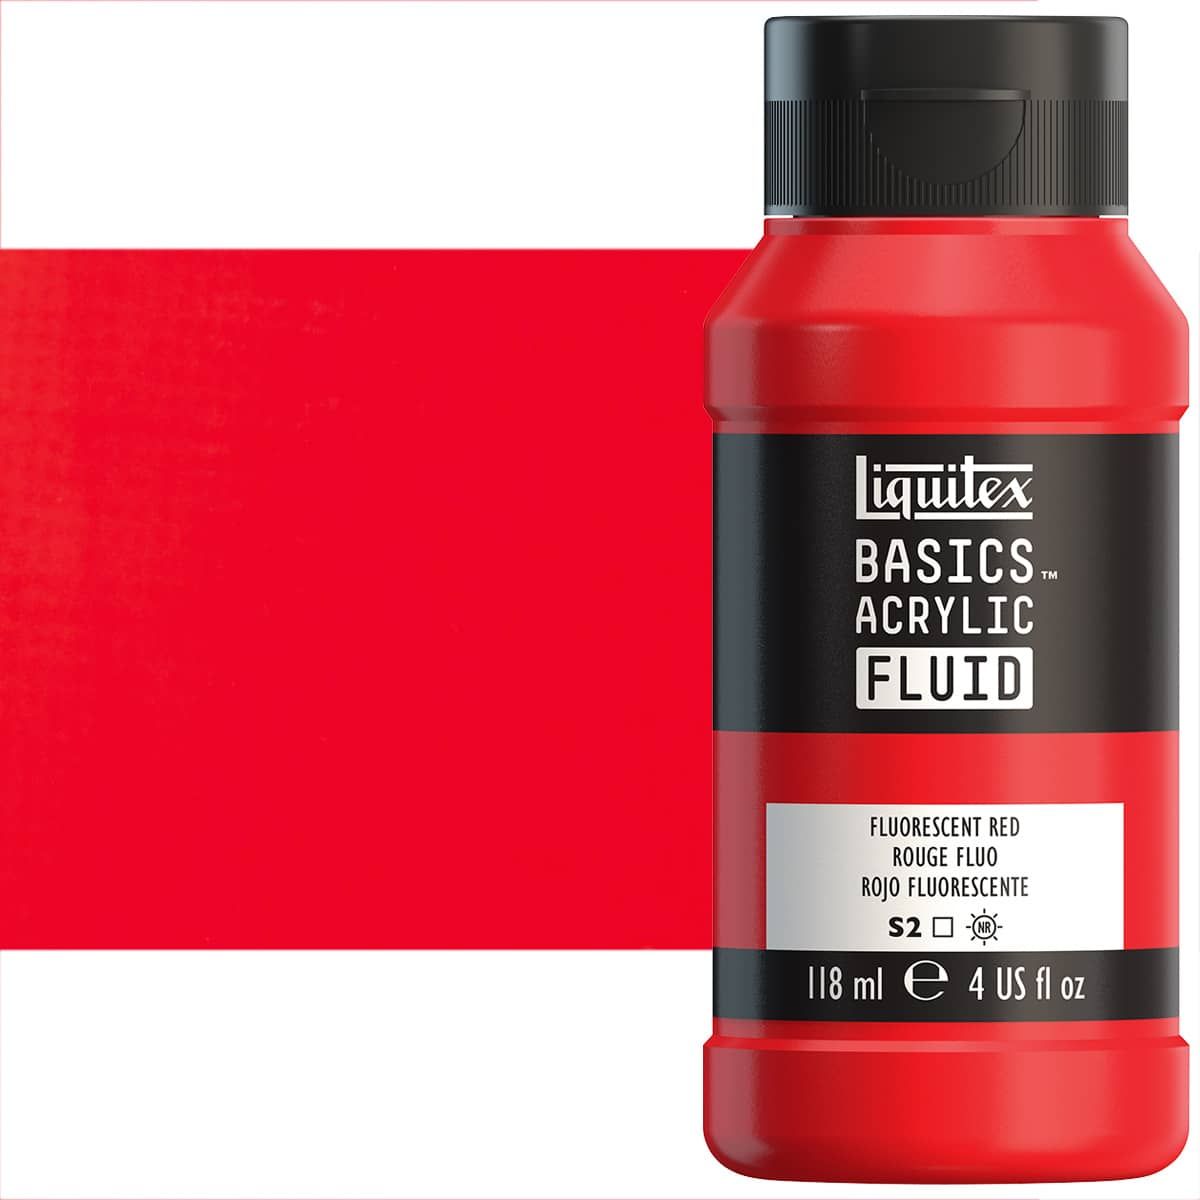 Liquitex Basics Fluid Acrylic - Fluorescent Red, 4oz Bottle